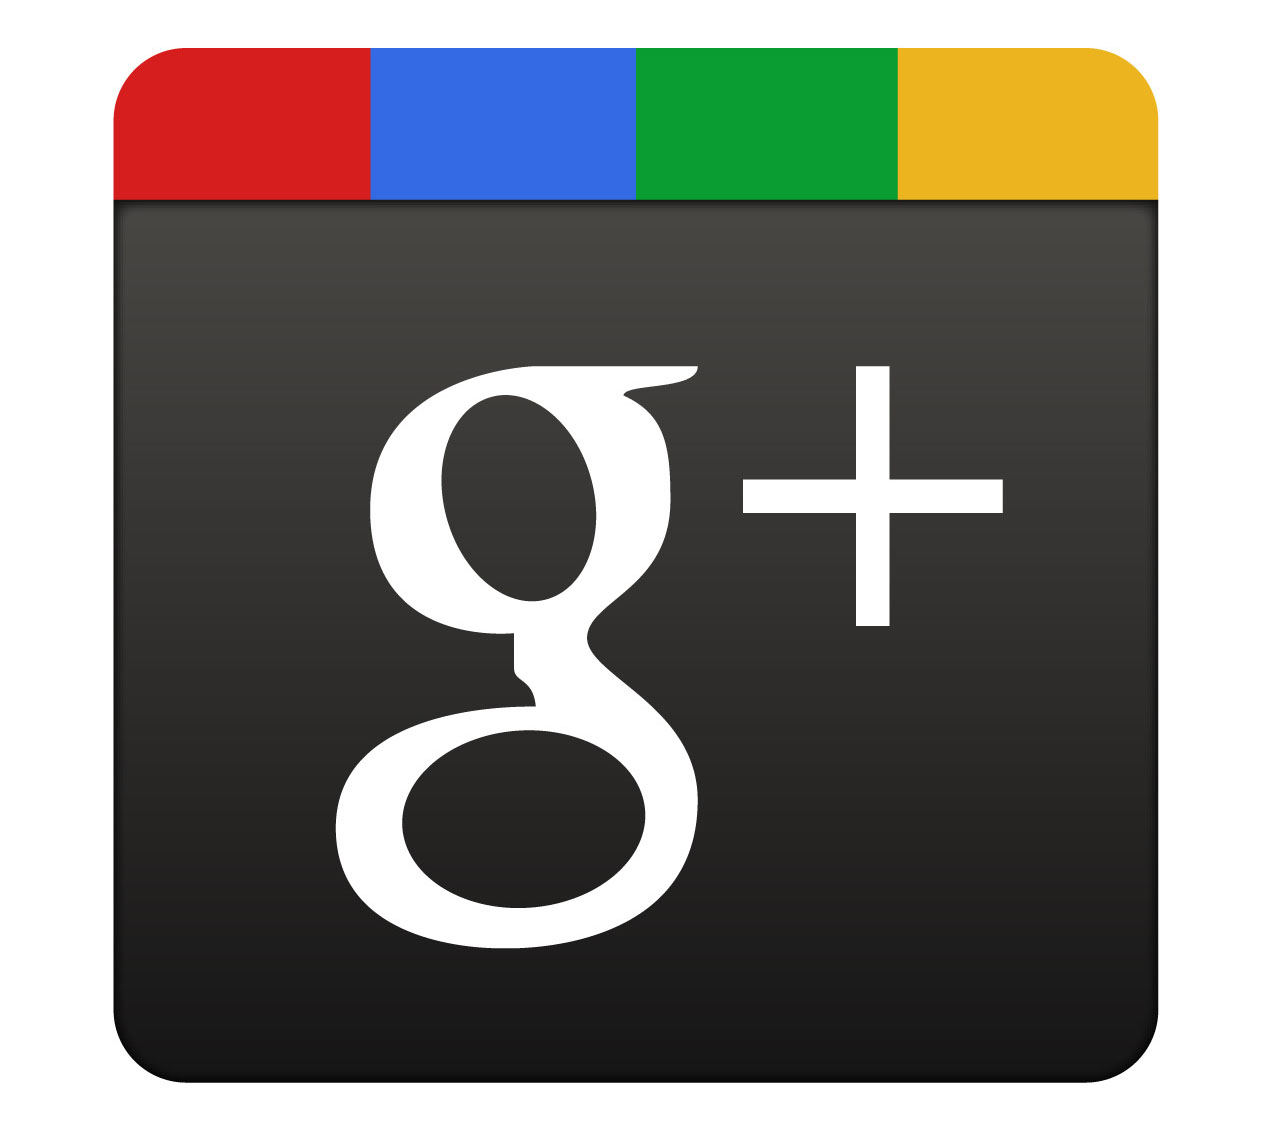 12 Google Plus Logo Vector Images